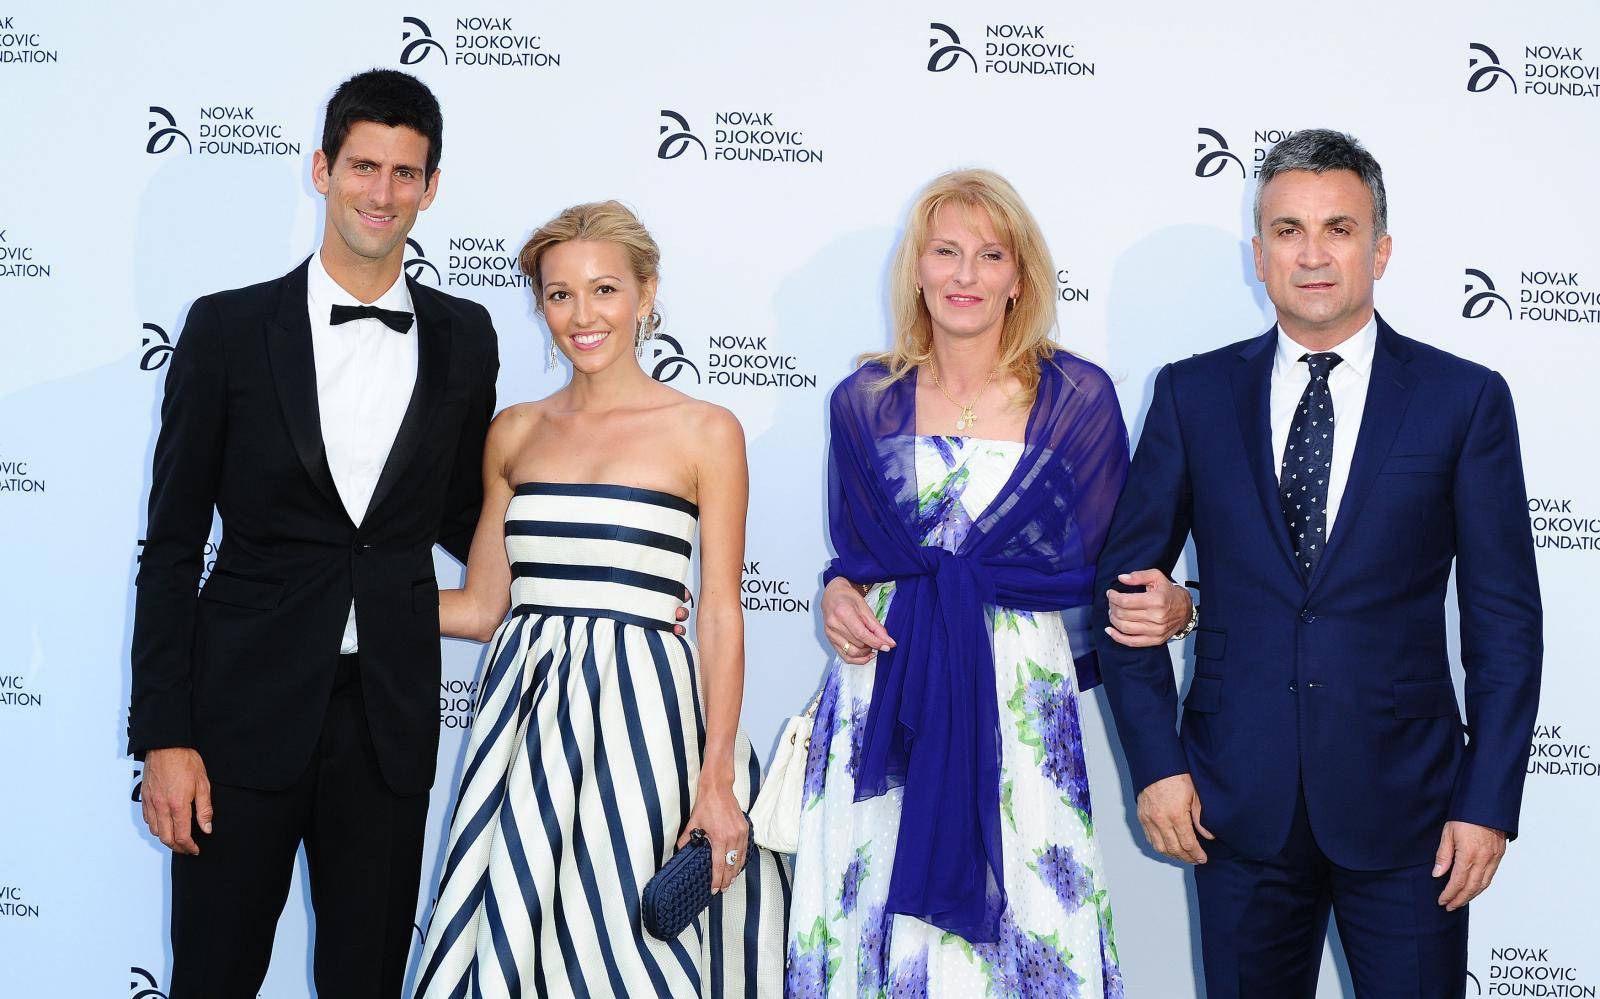 Novak Djokovic Foundation party